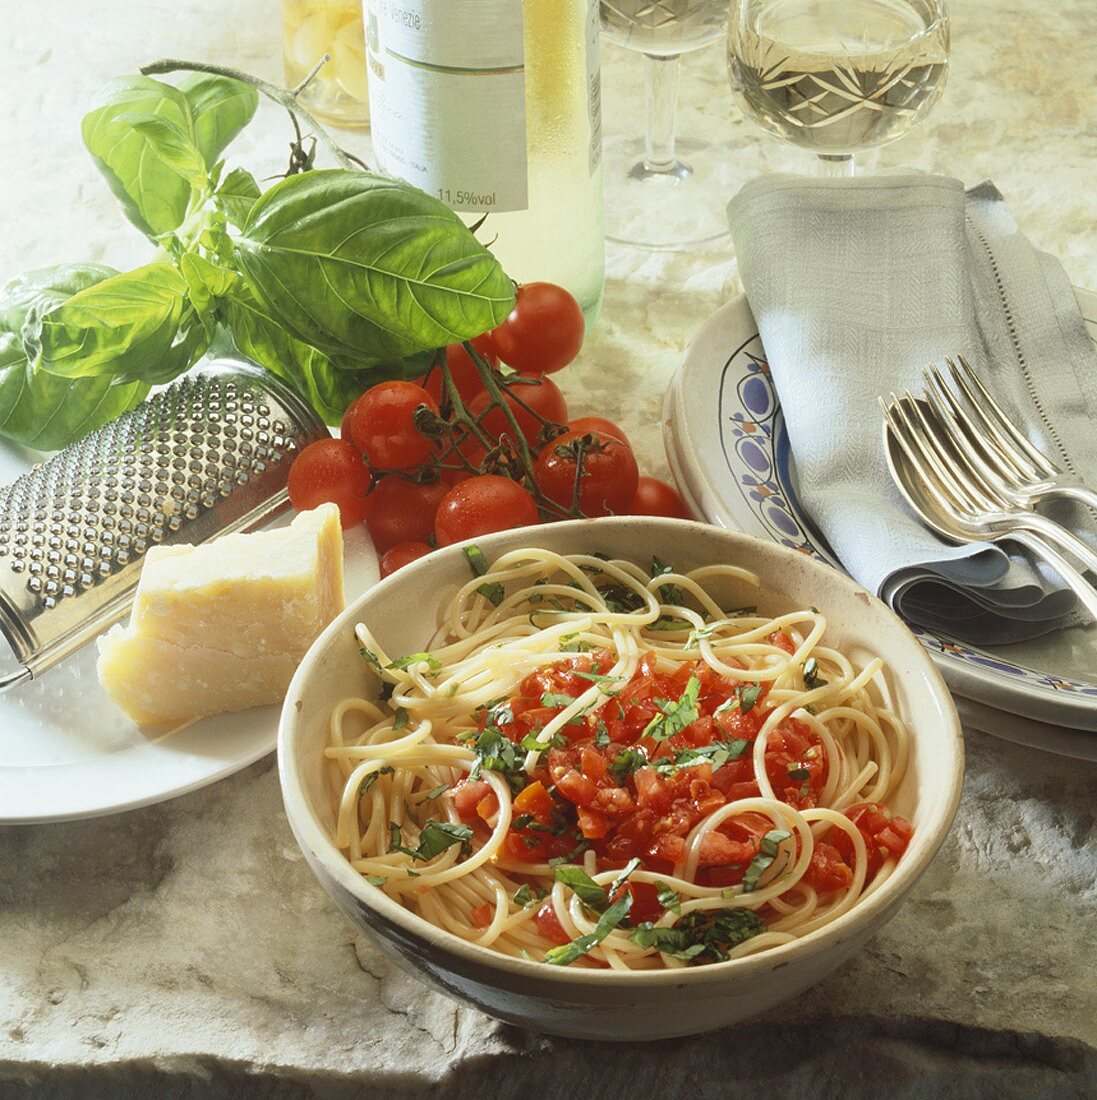 Spaghetti mit roher Tomatensauce und Basilikum